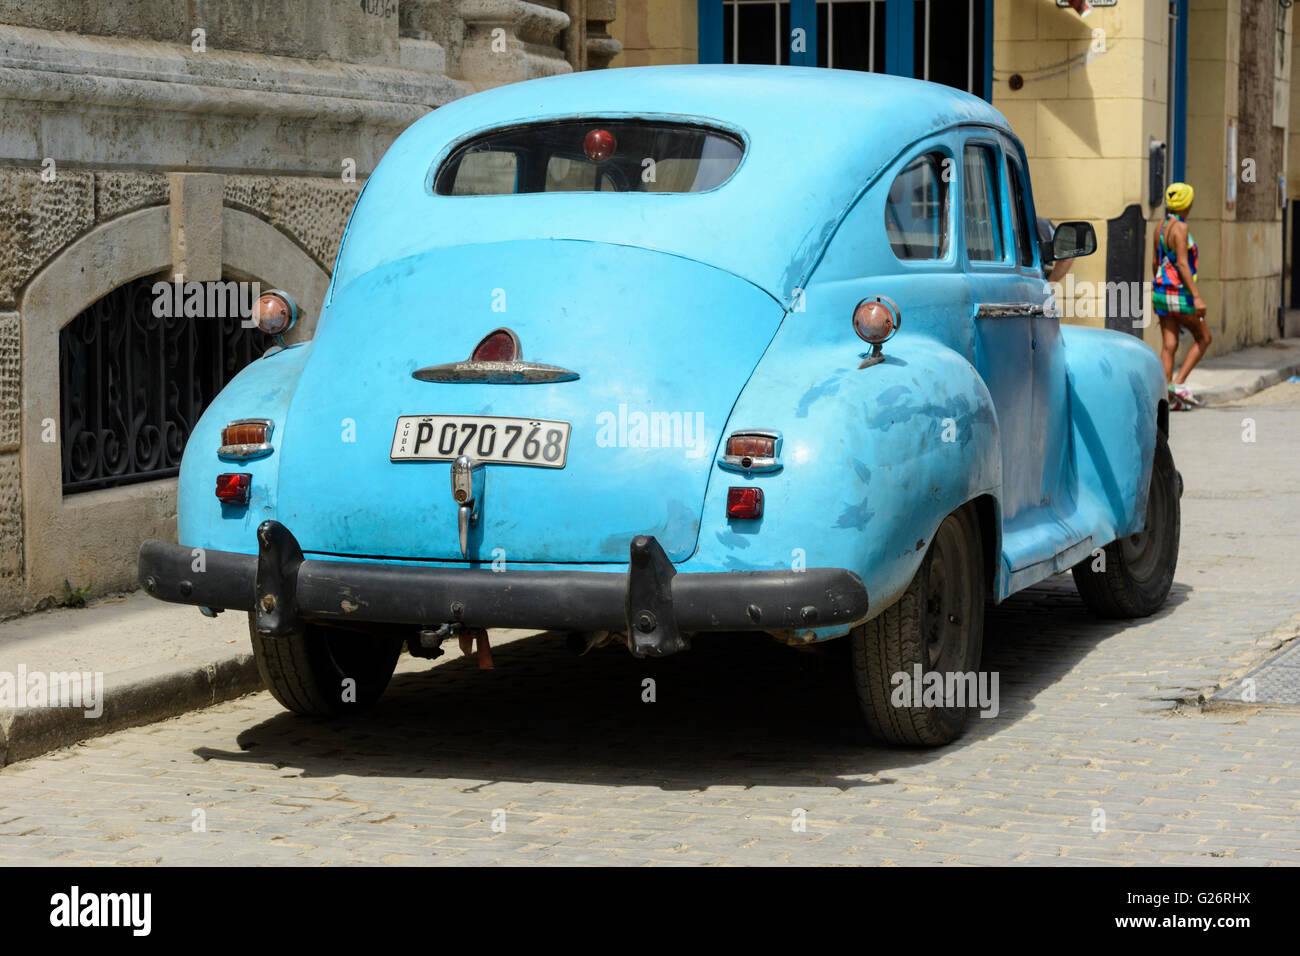 Vintage American car in Havana, Cuba Stock Photo